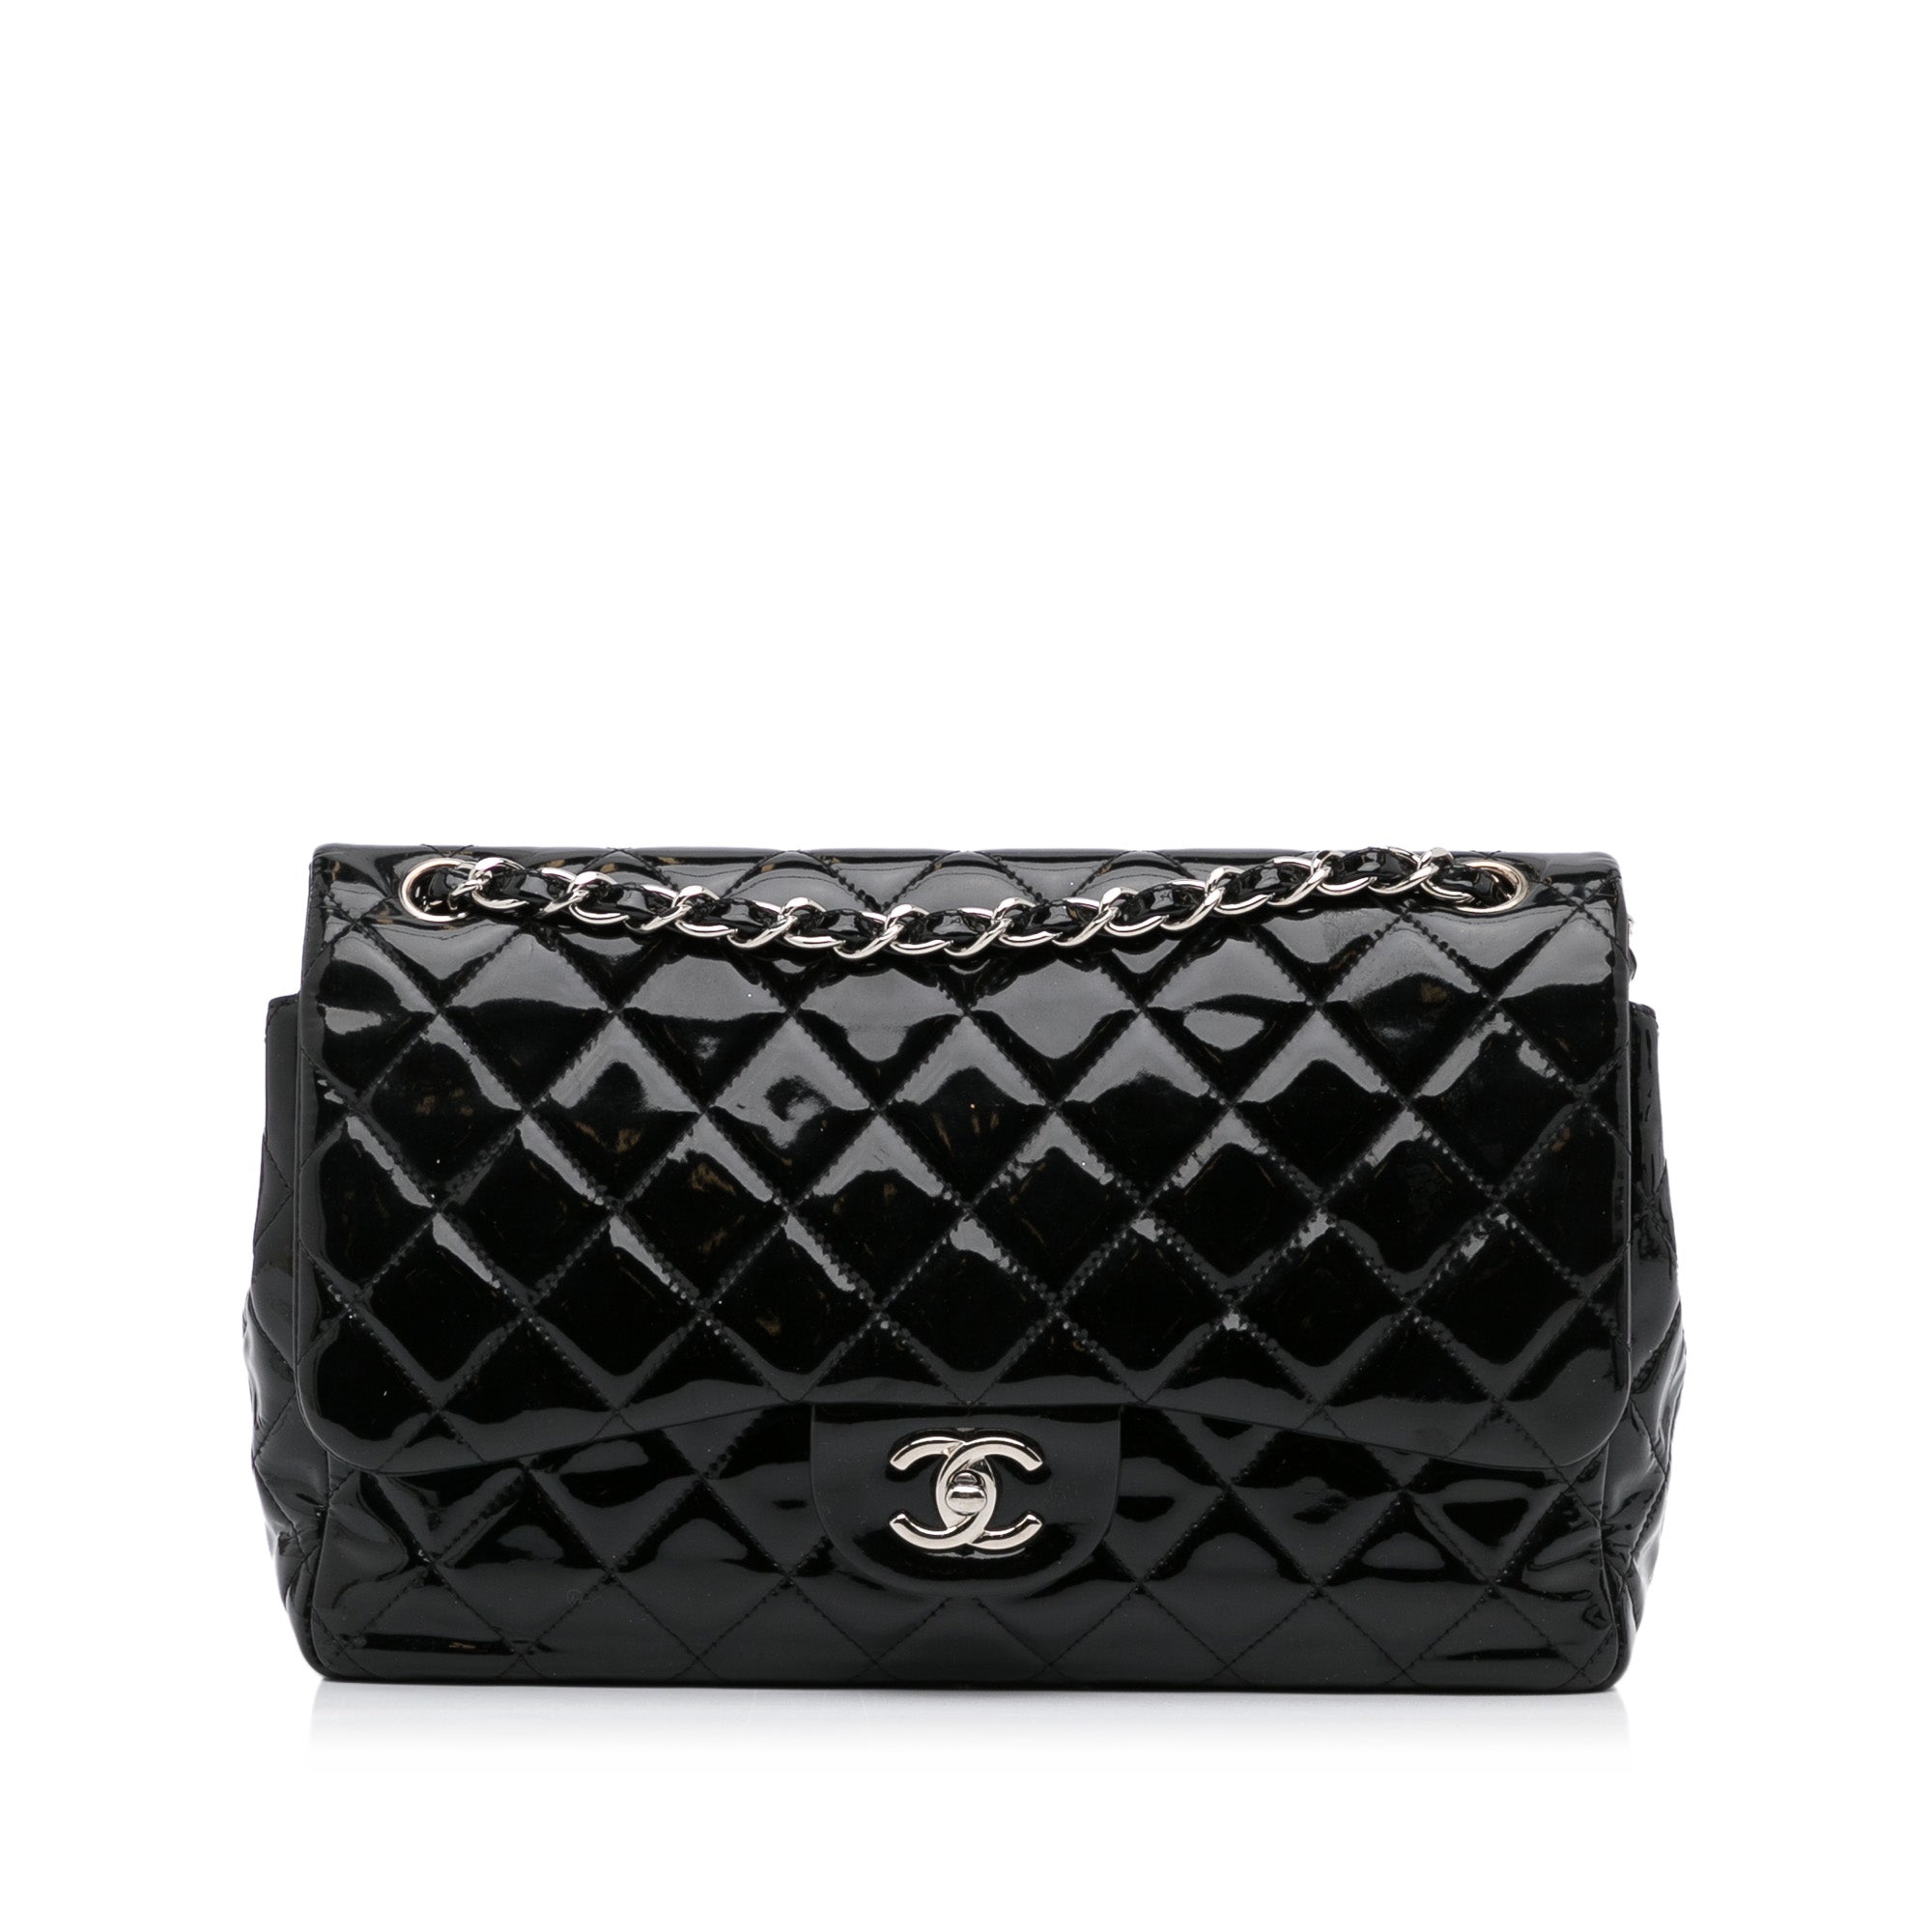 Black Chanel Jumbo Classic Patent Double Flap Shoulder Bag